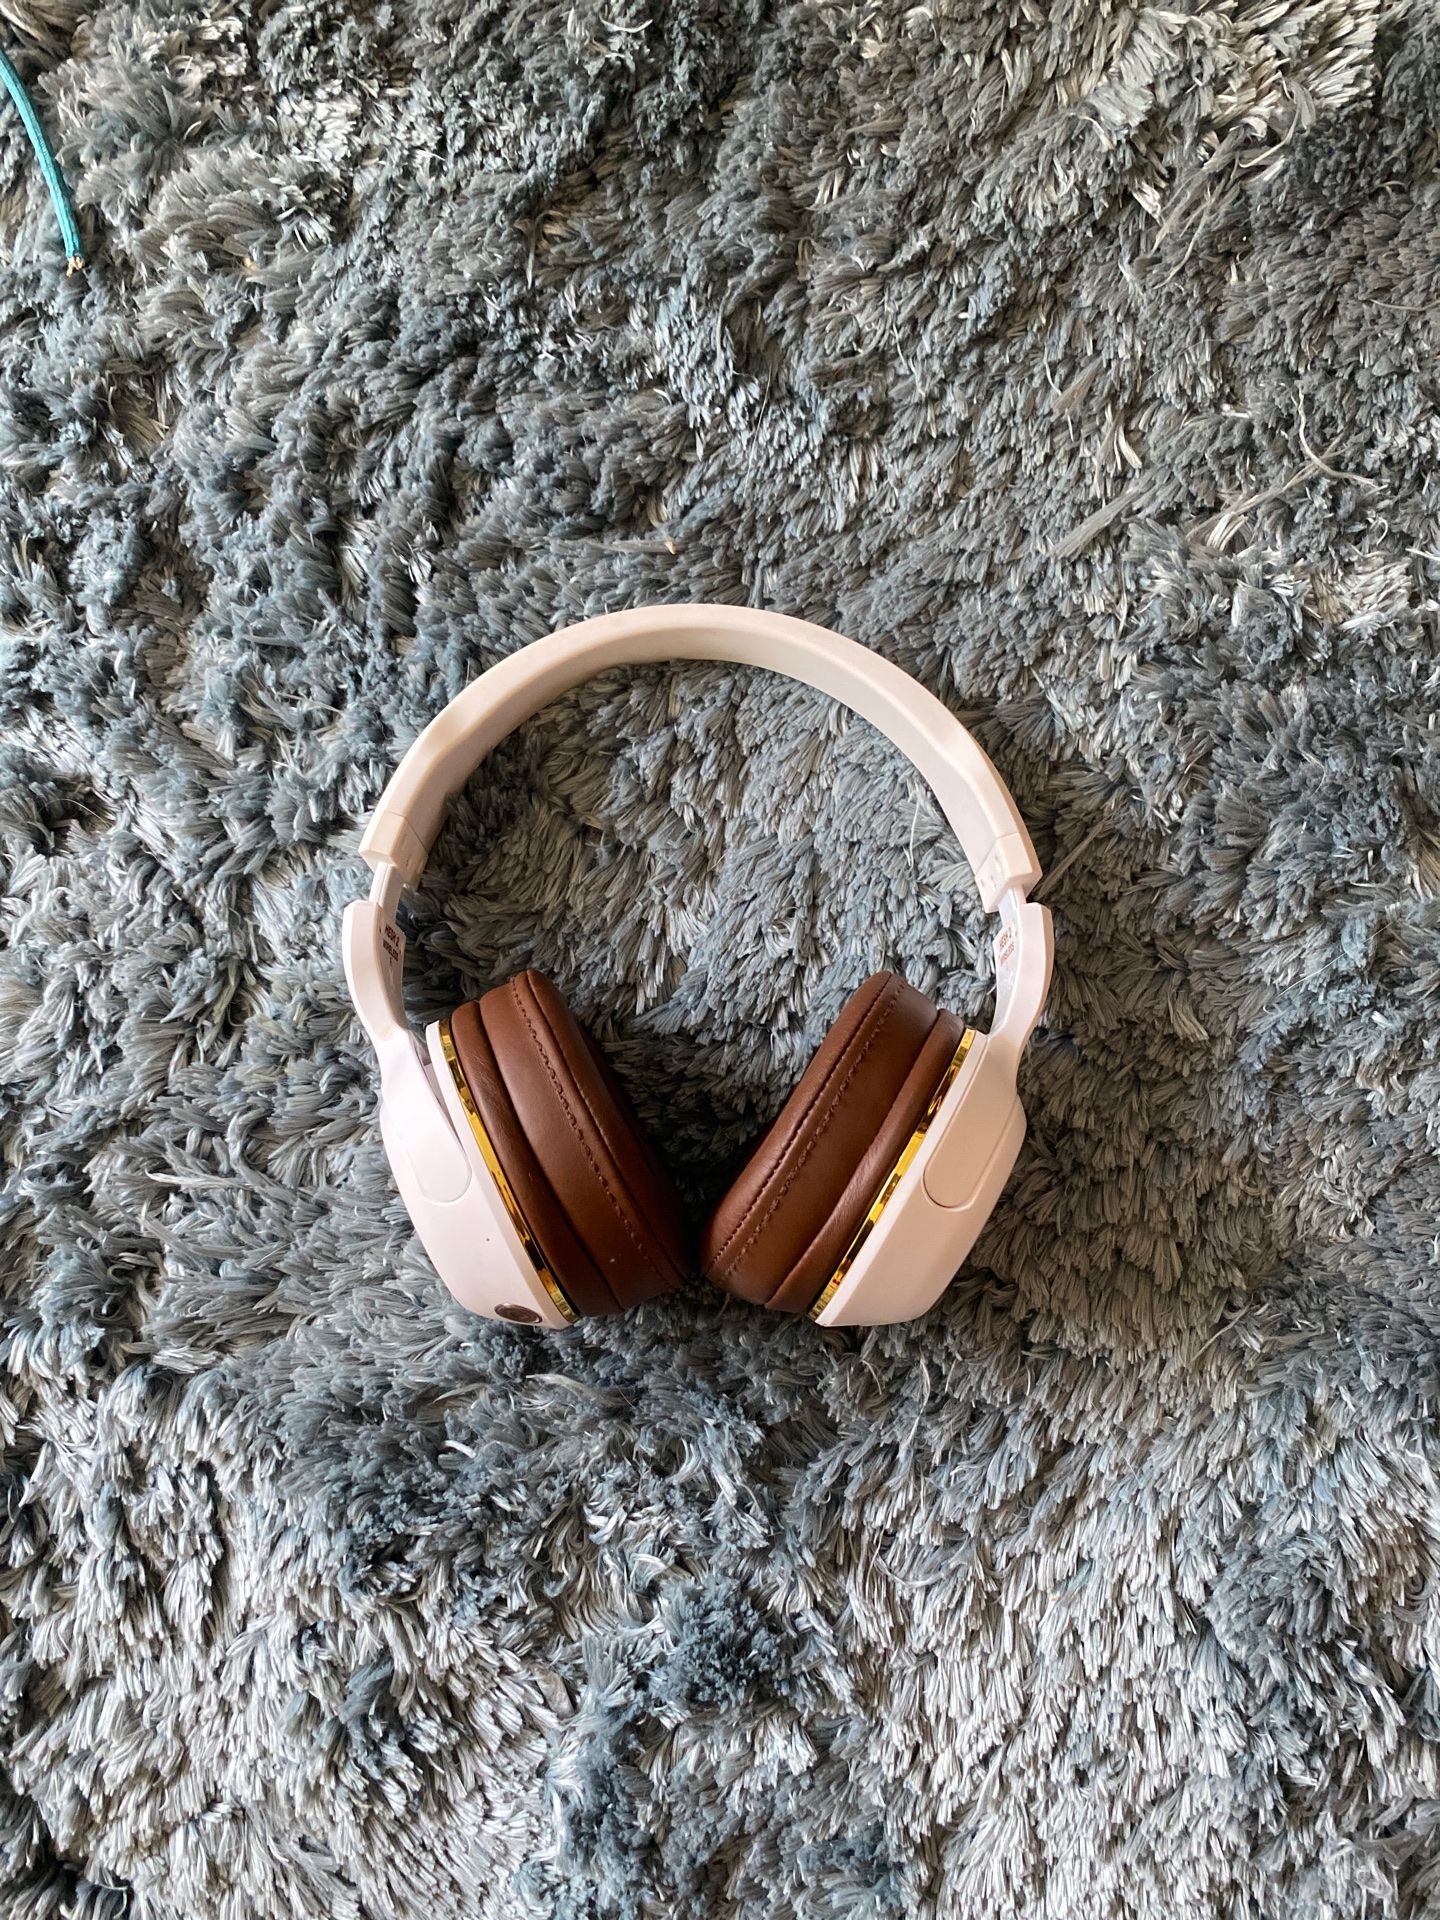 Skullcandy over ear headphones